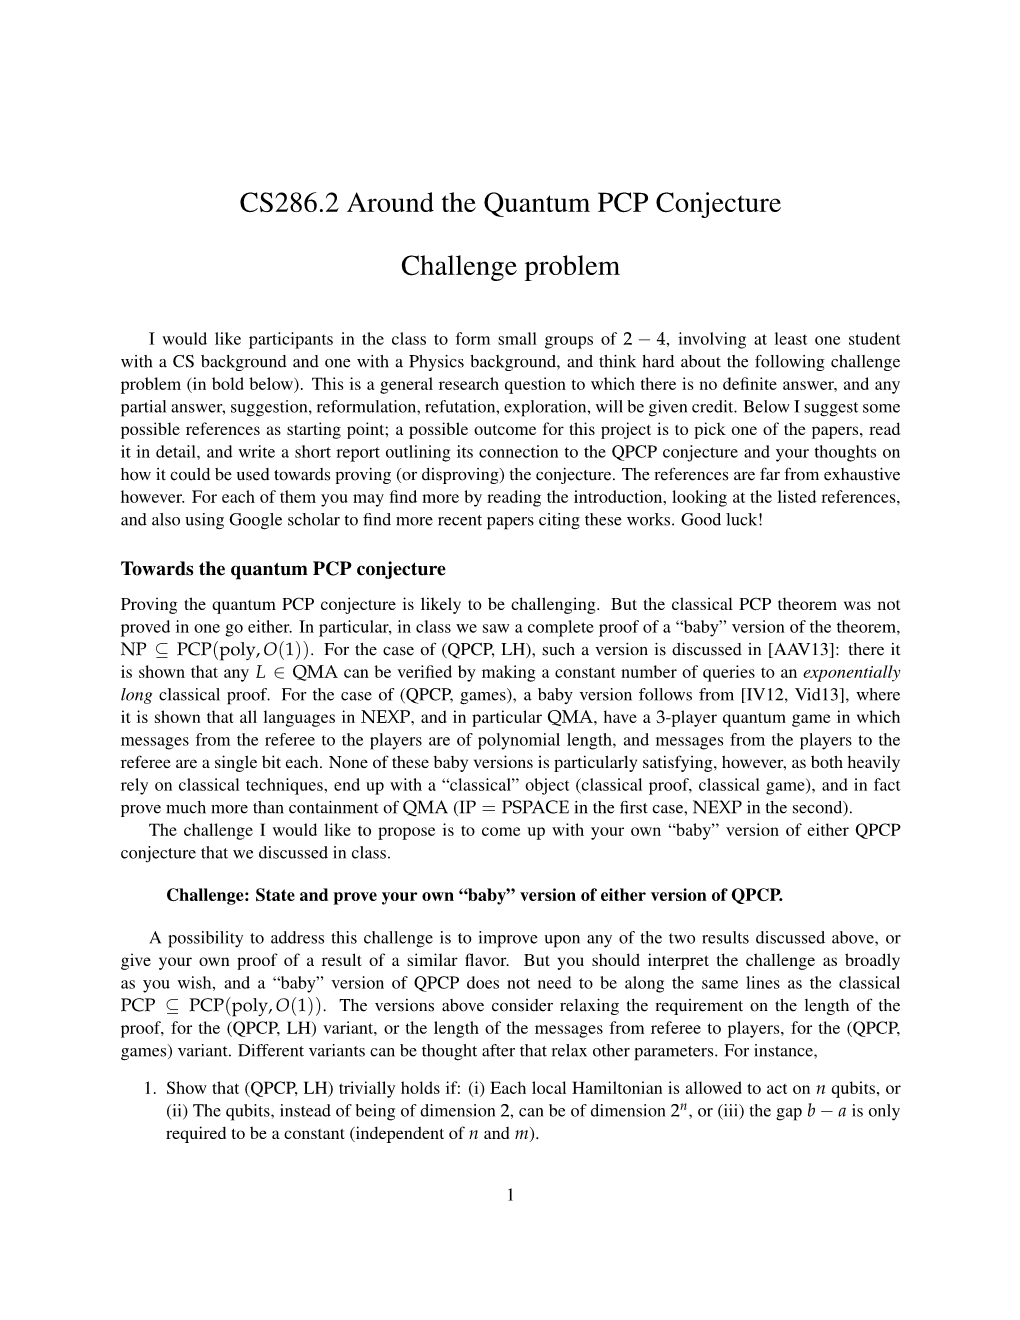 CS286.2 Around the Quantum PCP Conjecture Challenge Problem